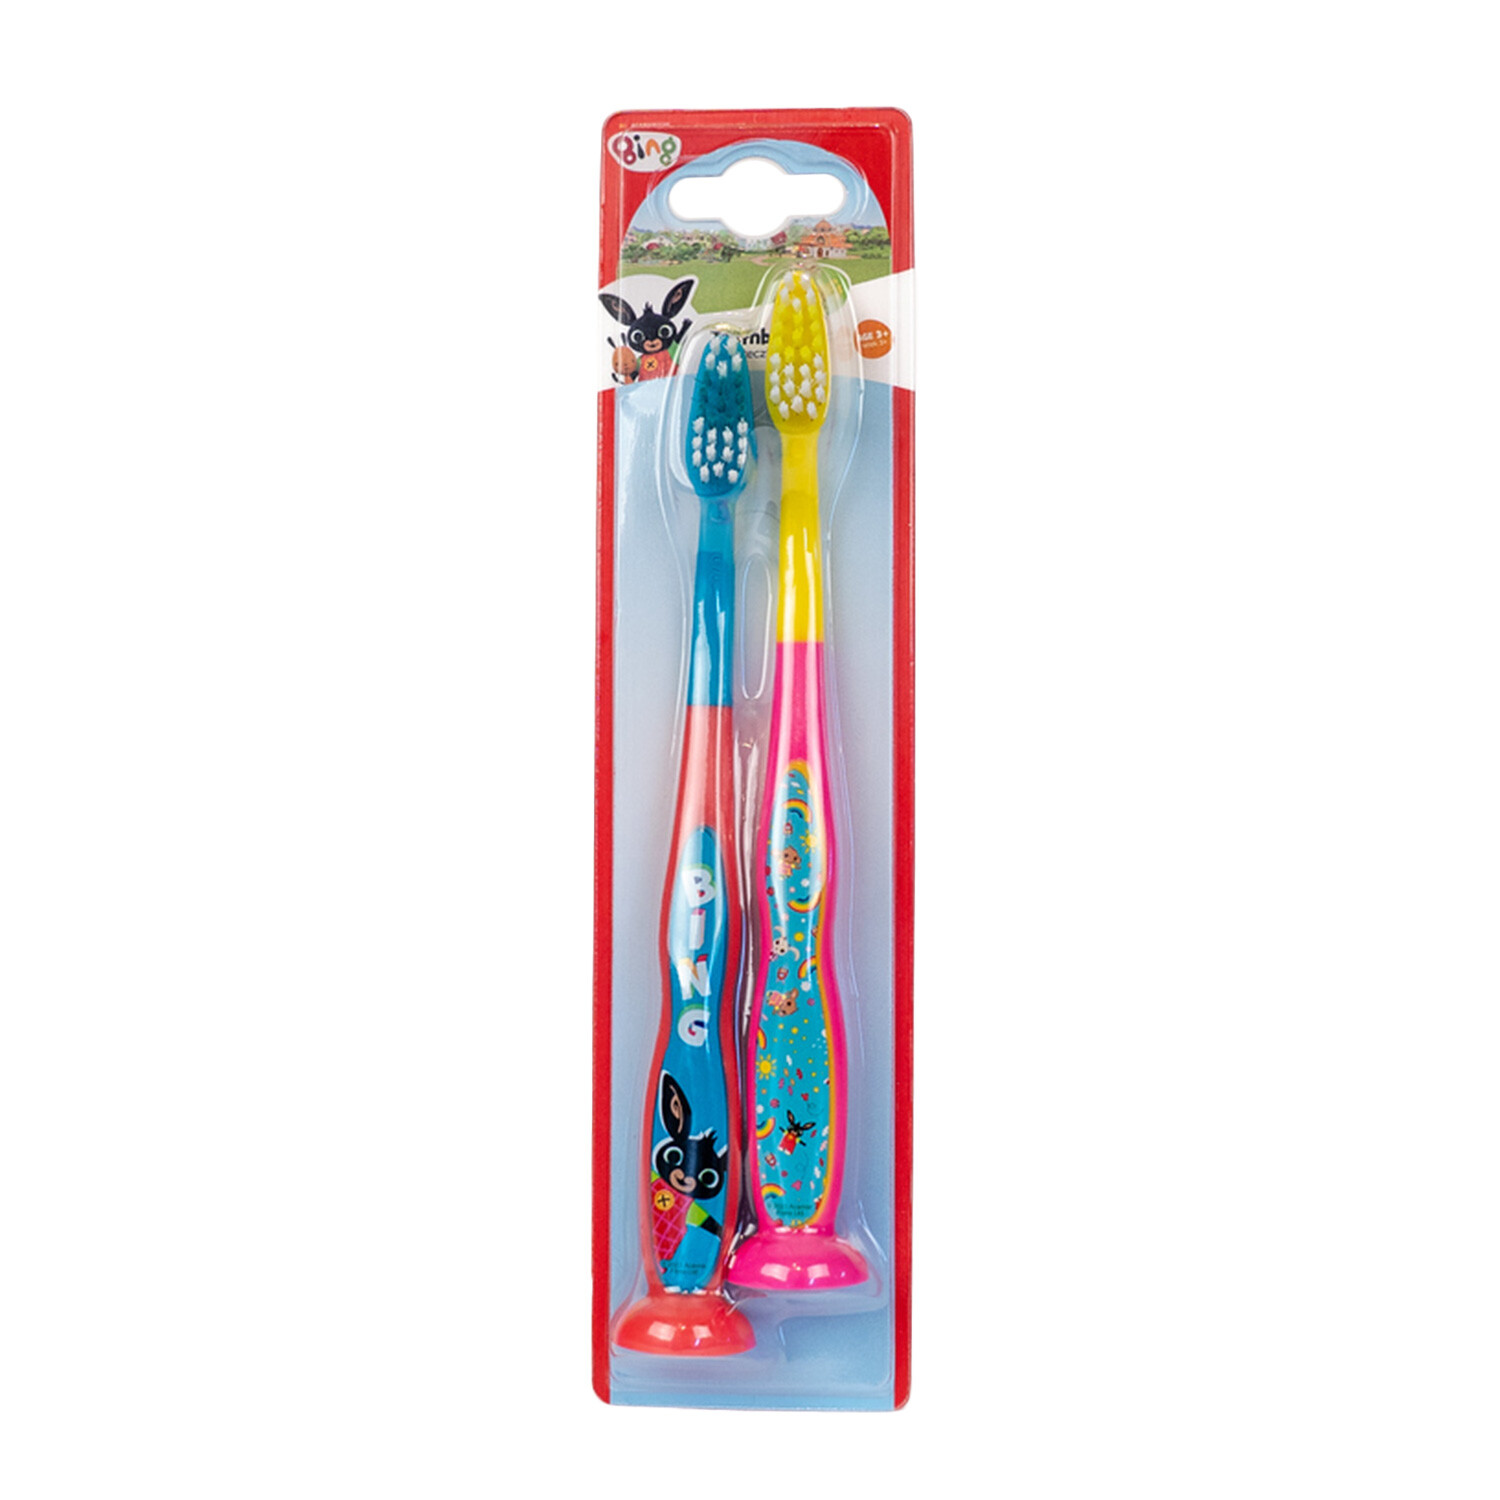 Pack of 2 Bing Toothbrushes Image 2